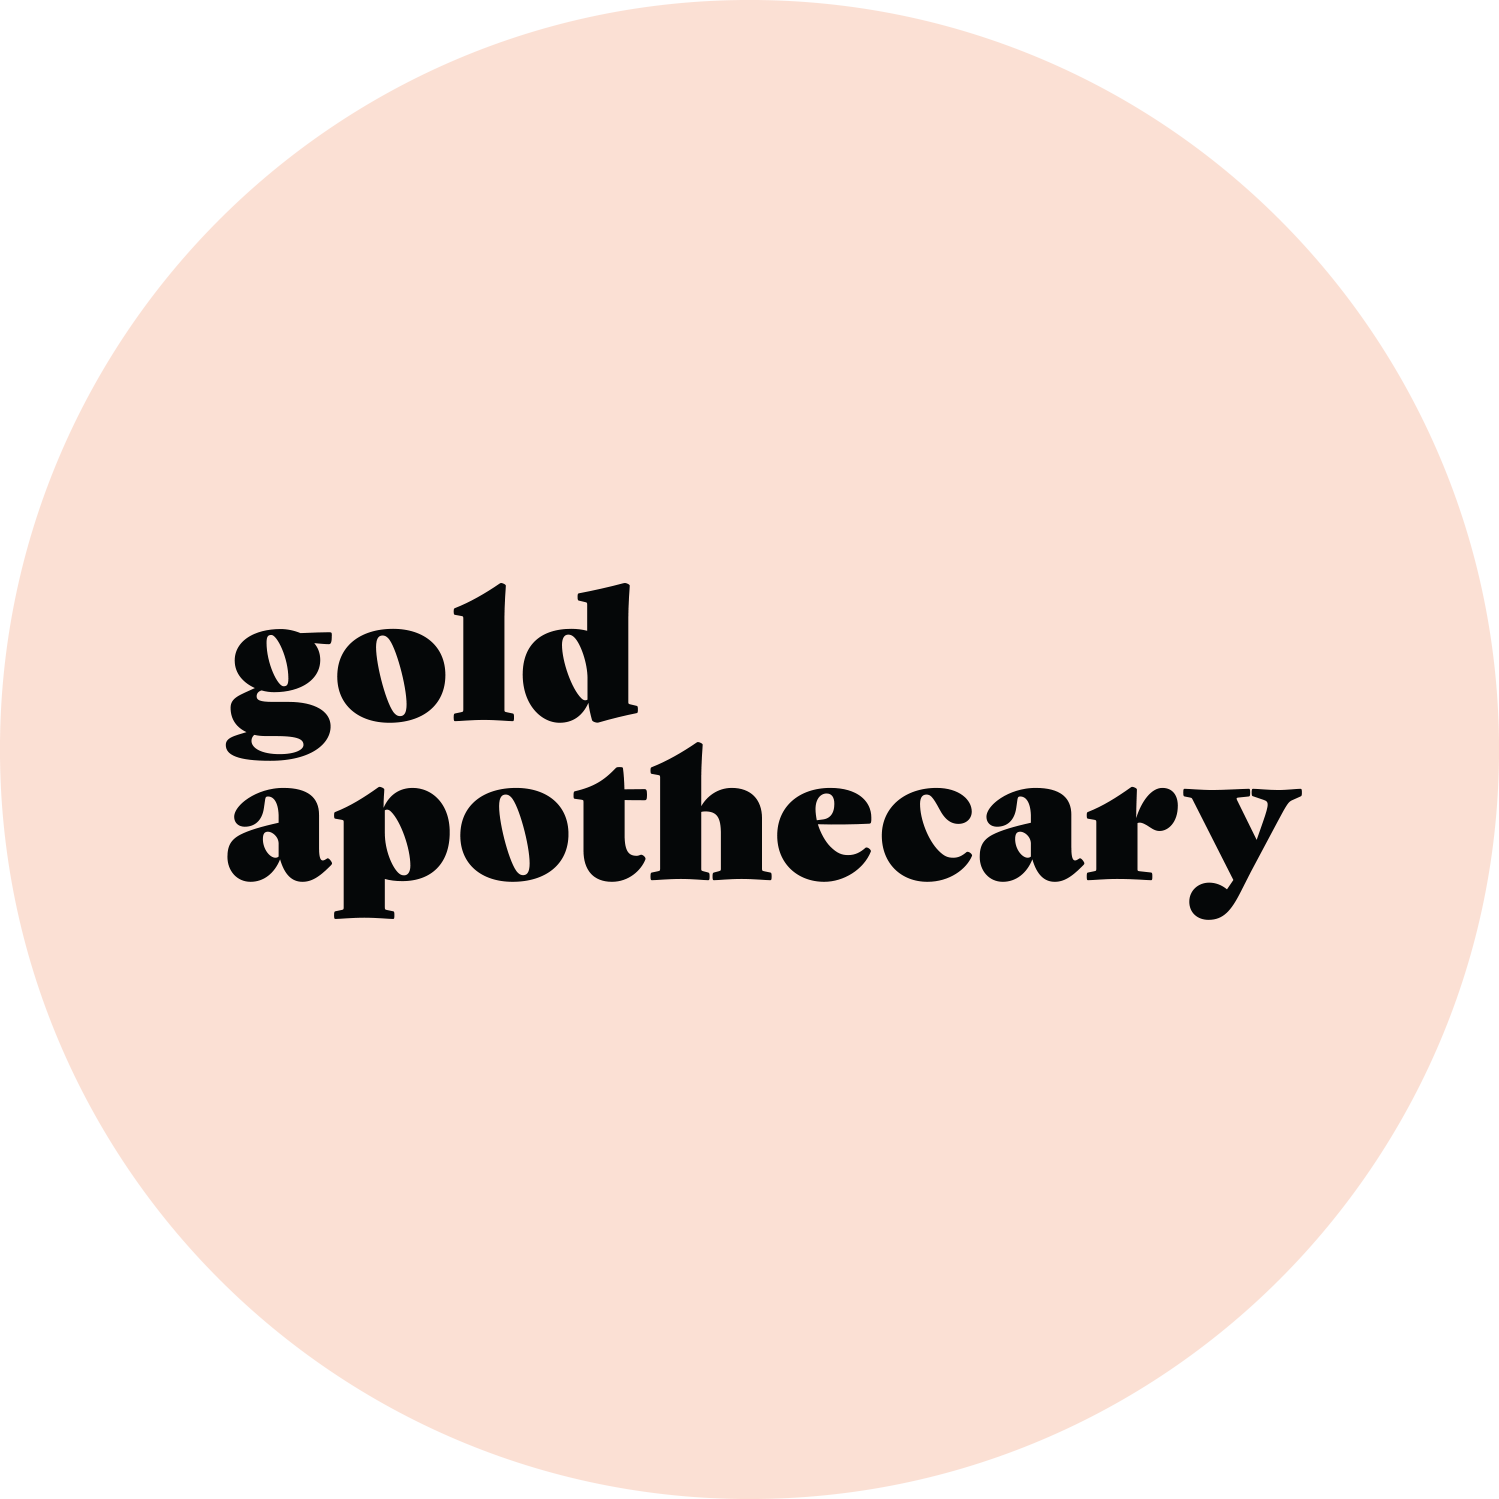 Gold Apothecary